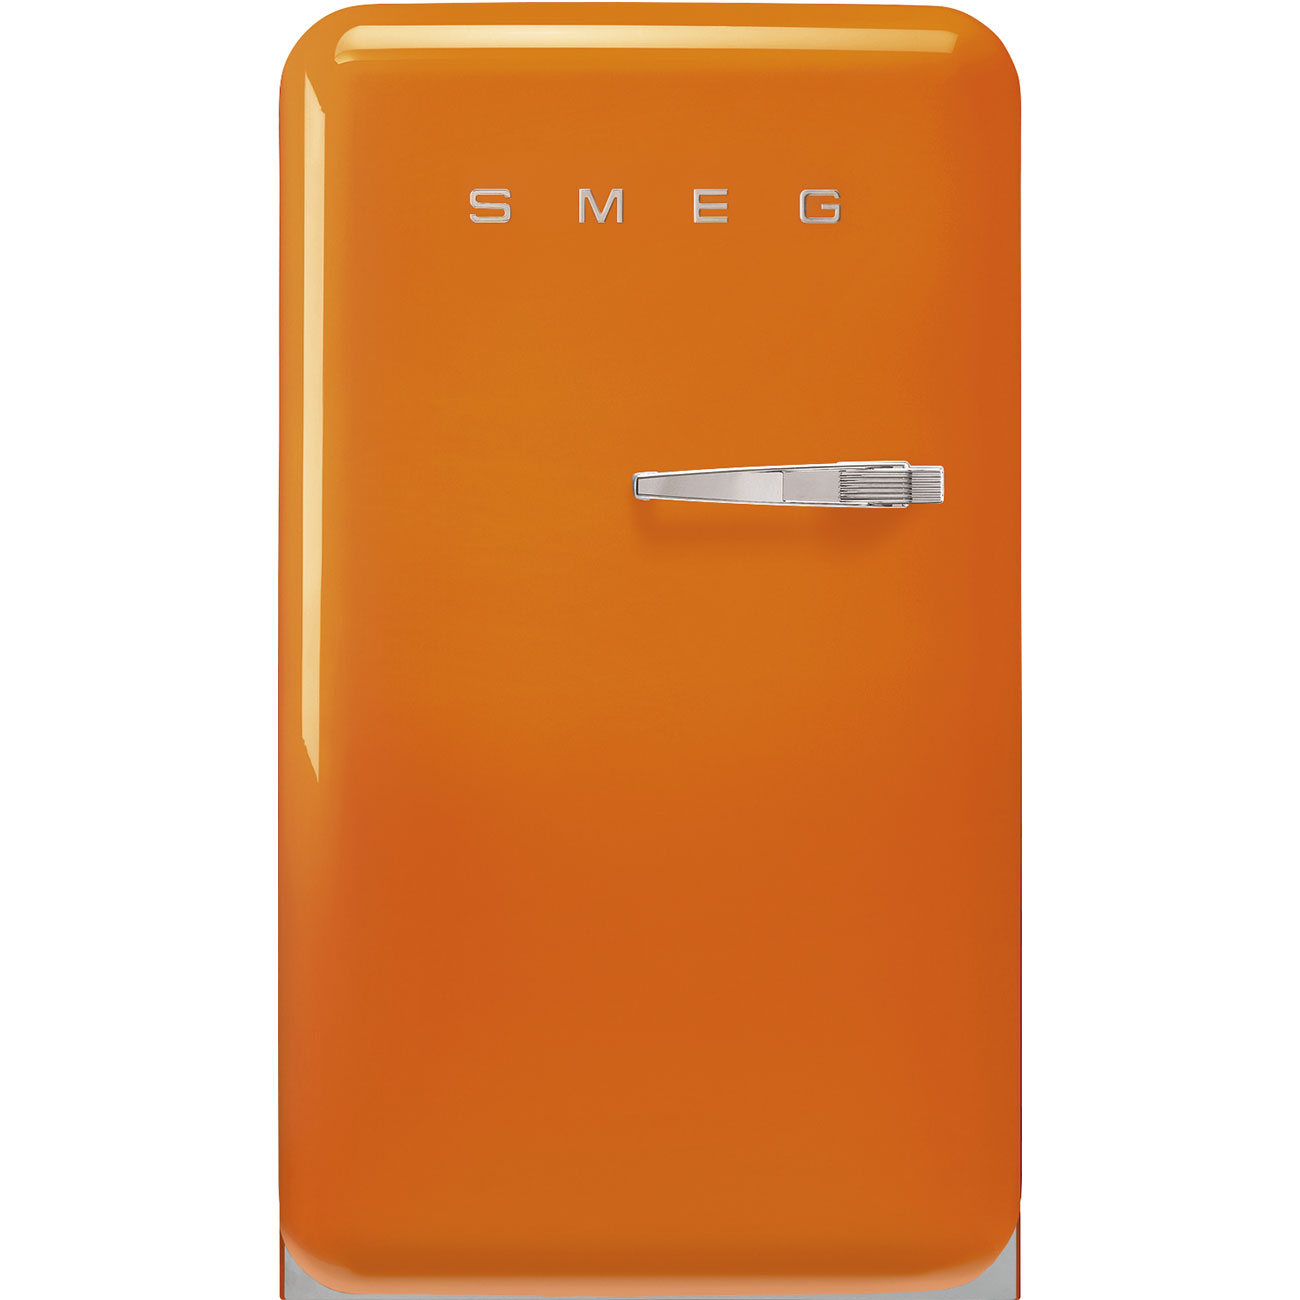 Oranje koelkast - Smeg_1